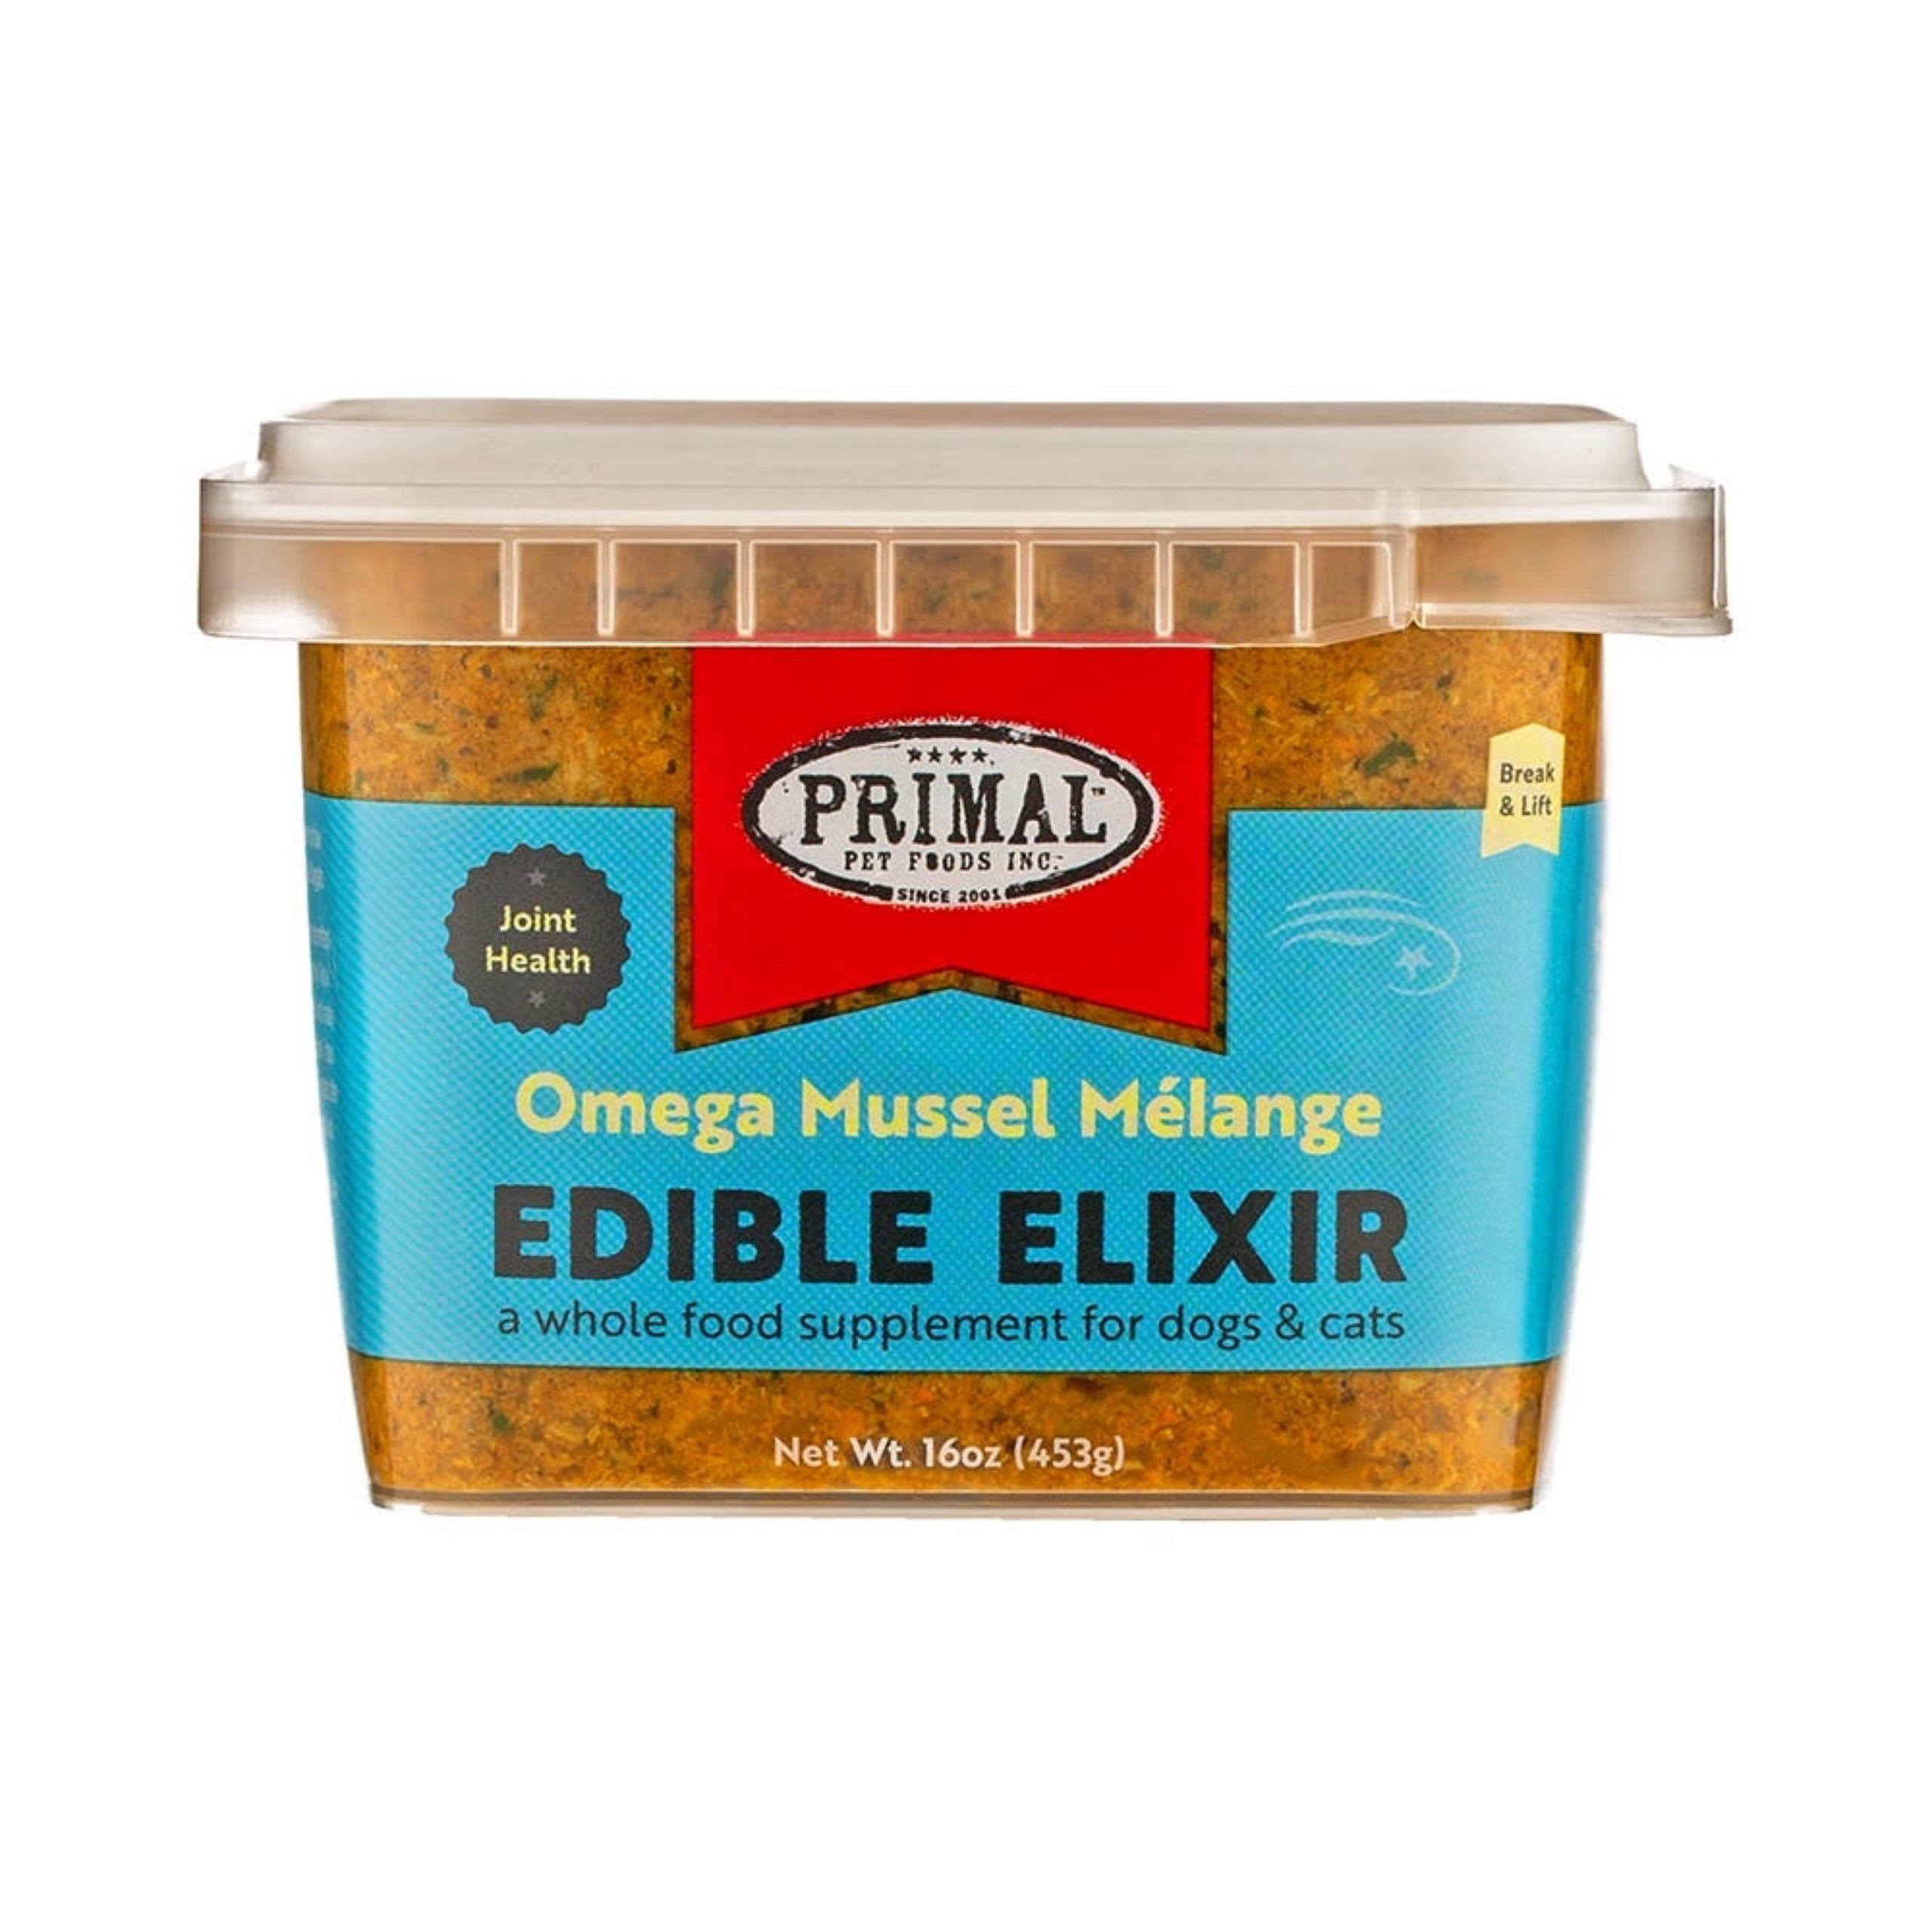 Primal Edible Elixir: Omega Mussel Melange 16-oz